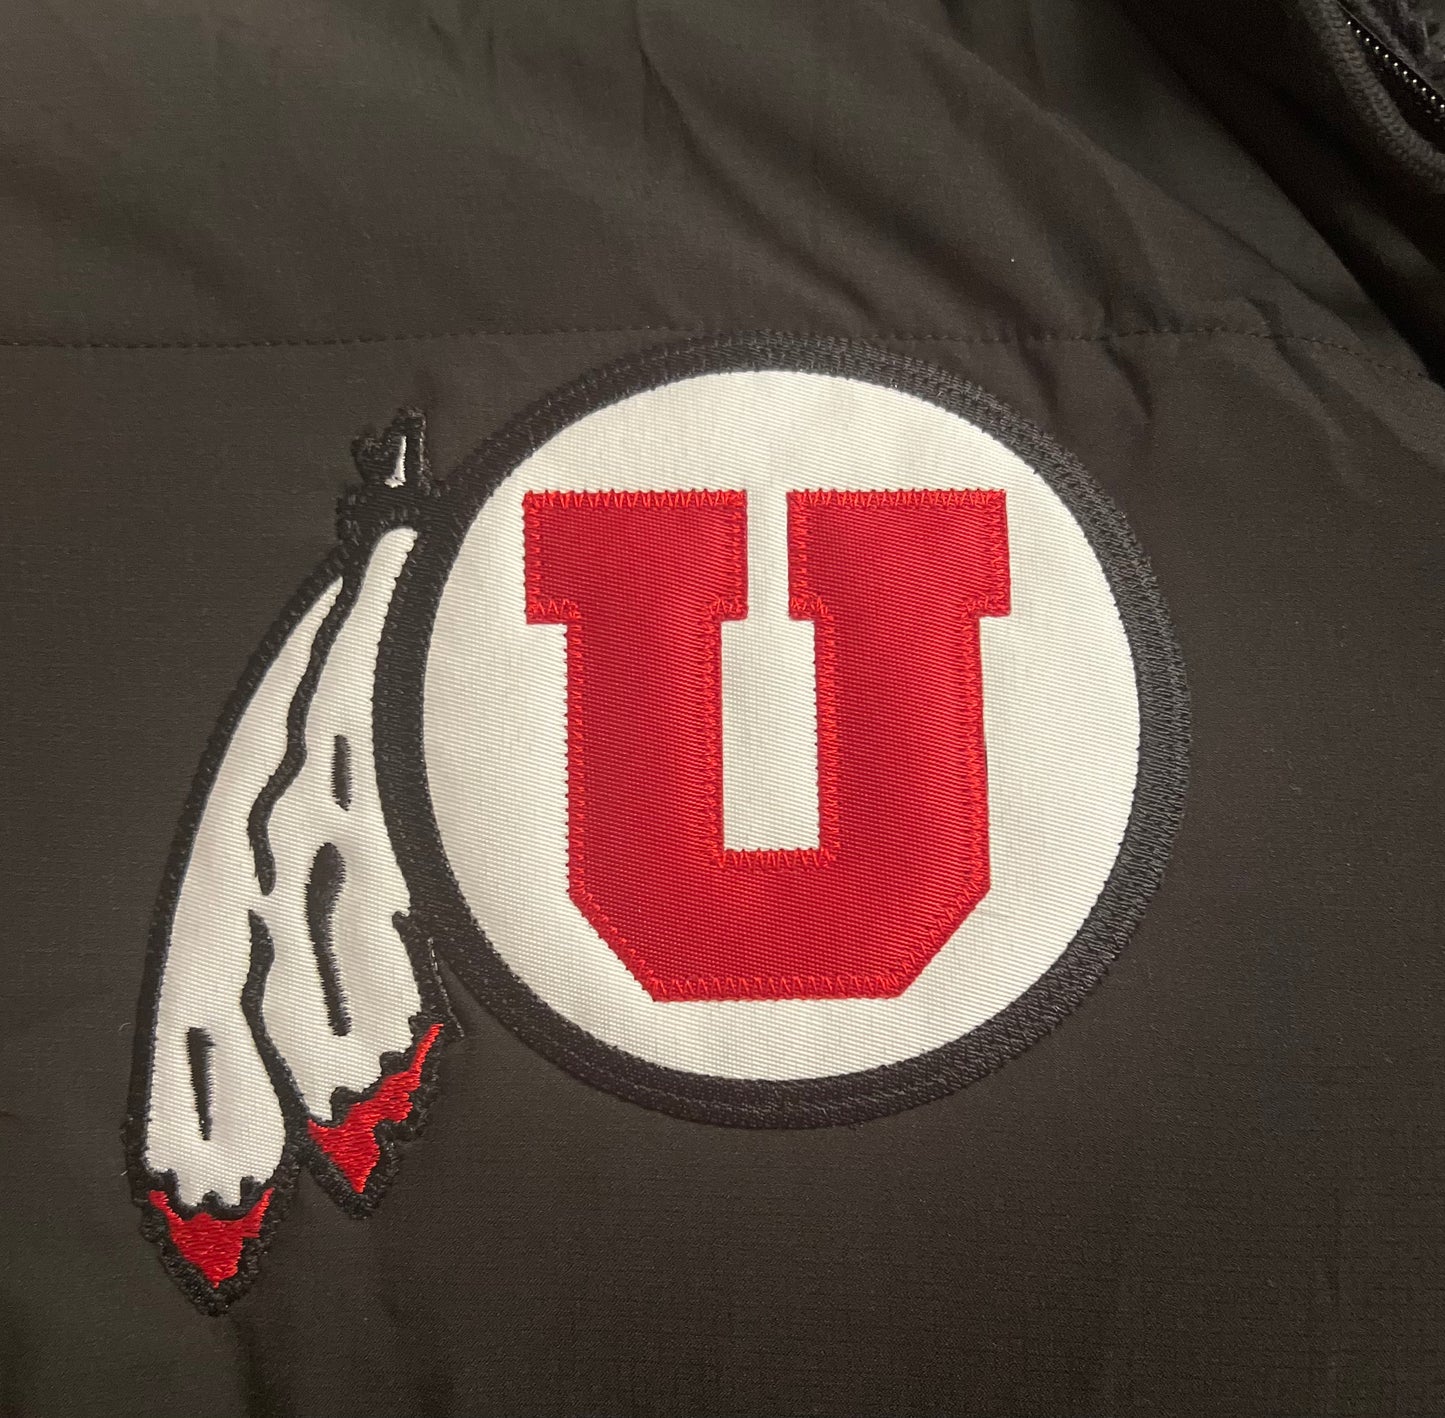 University of Utah - Black Drum and Feather